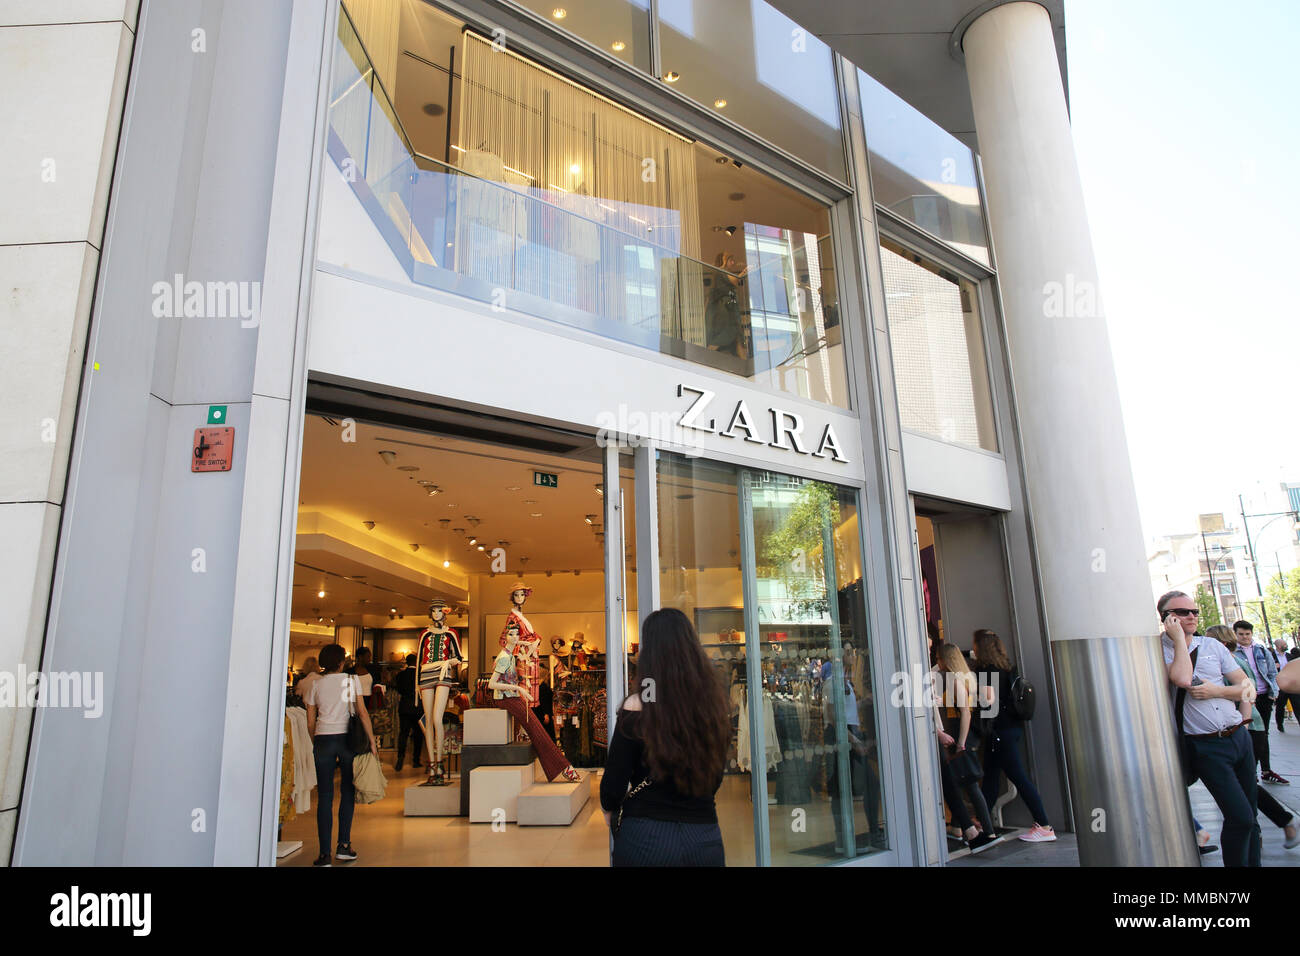 Zara Damen Mode Store auf der Oxford Street, London, UK Stockfotografie -  Alamy